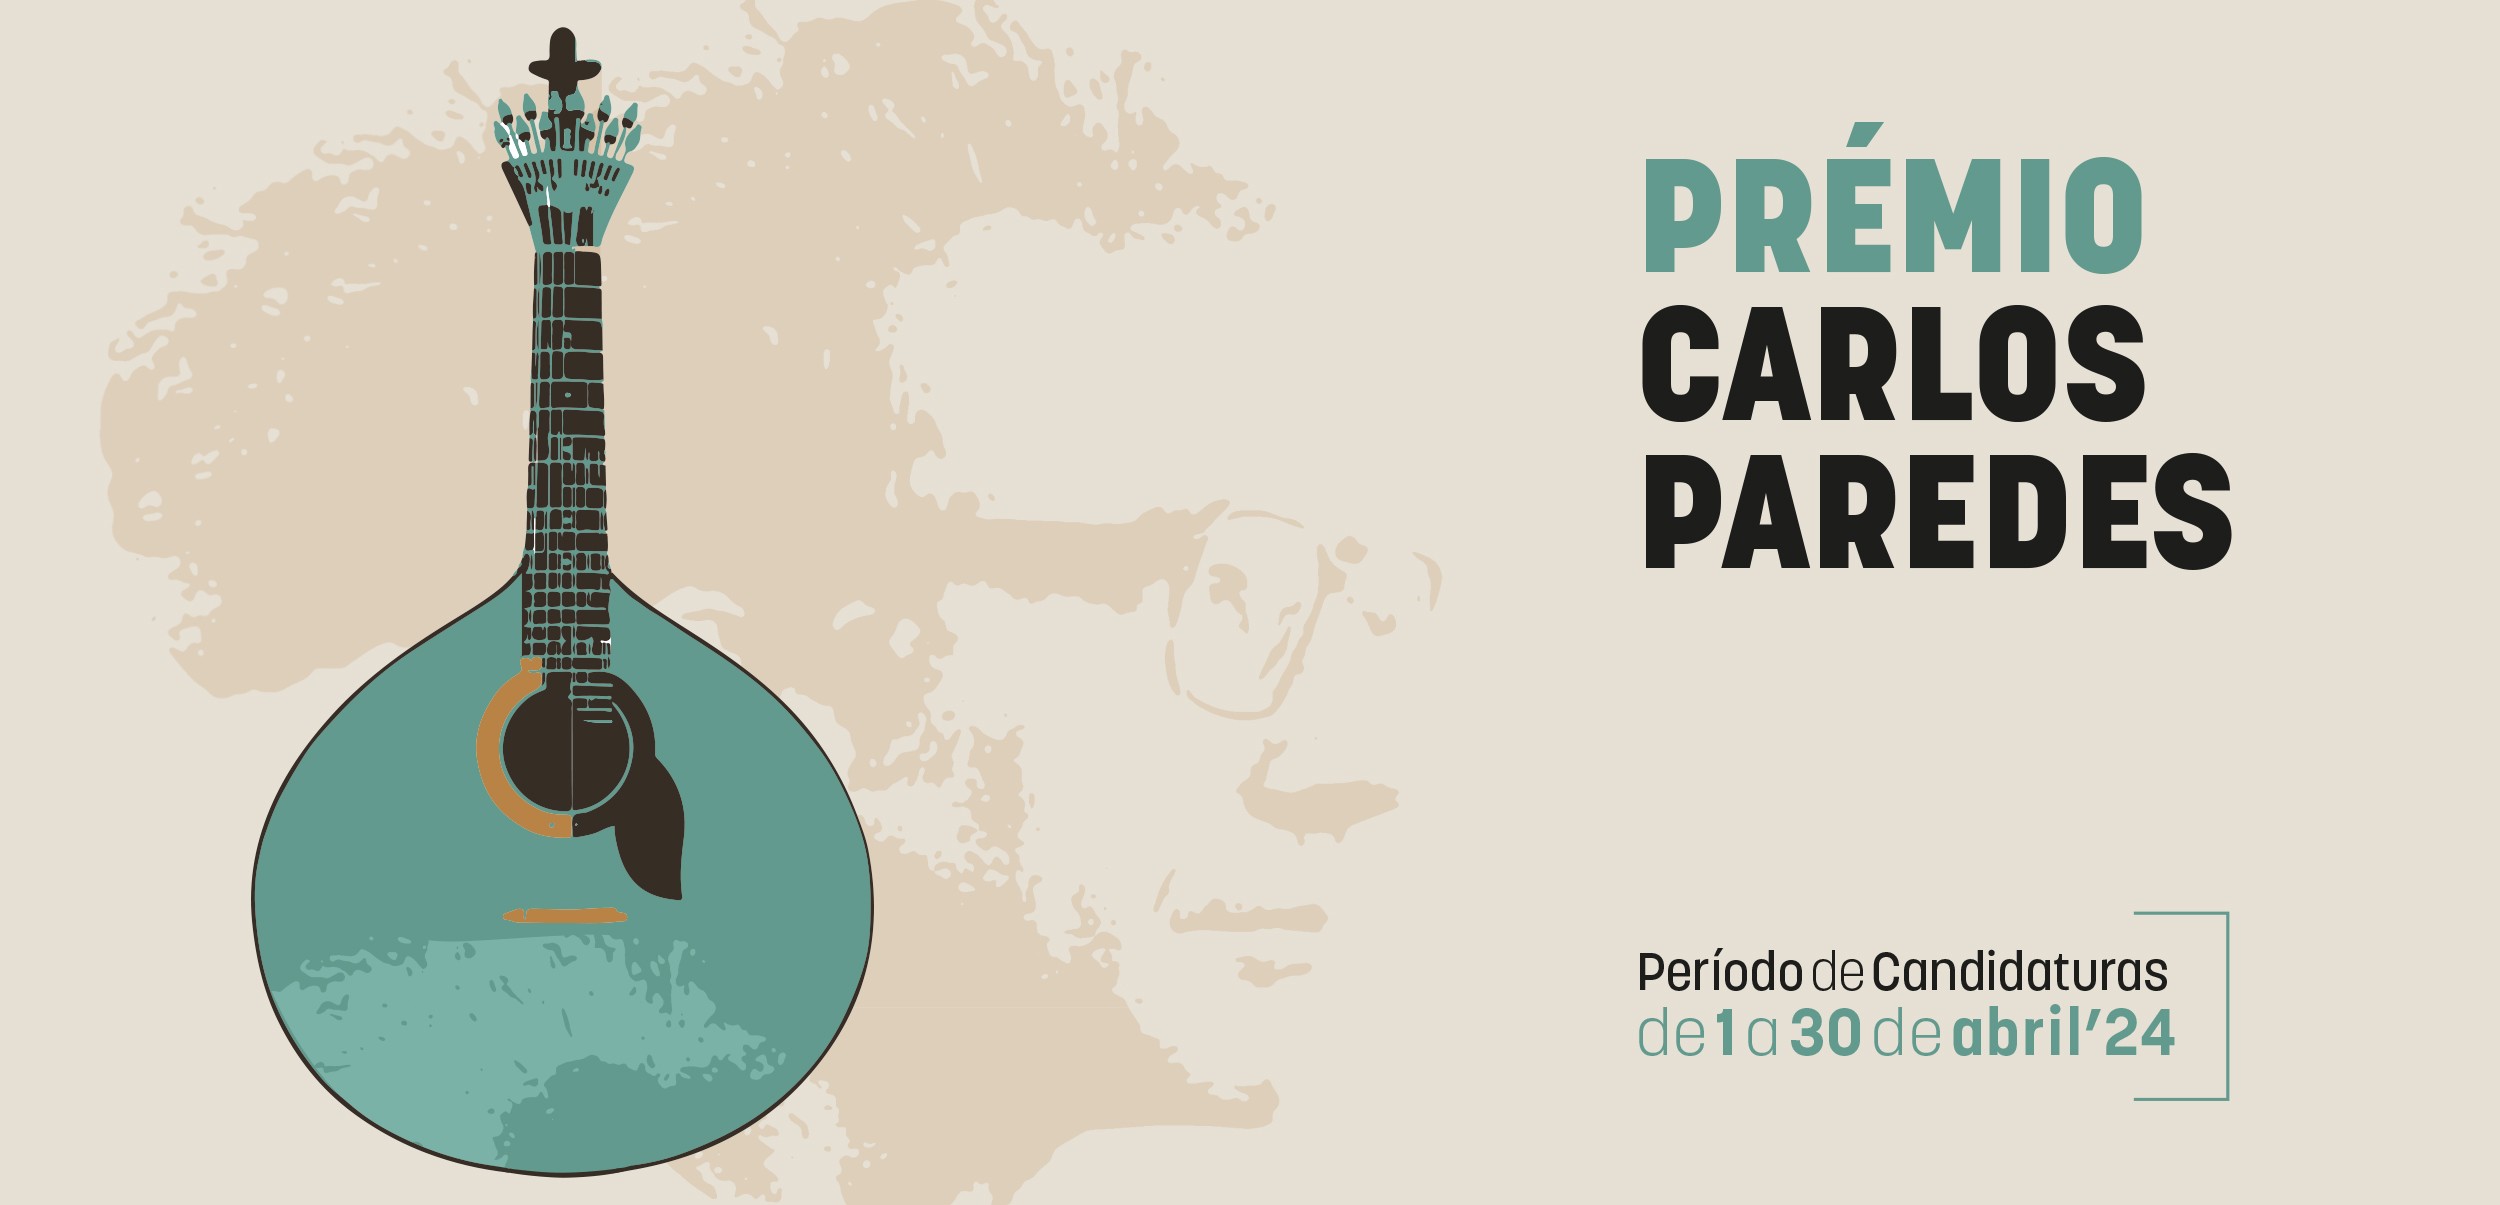 Prémio de música “Carlos Paredes” recebe candidaturas até final de abril